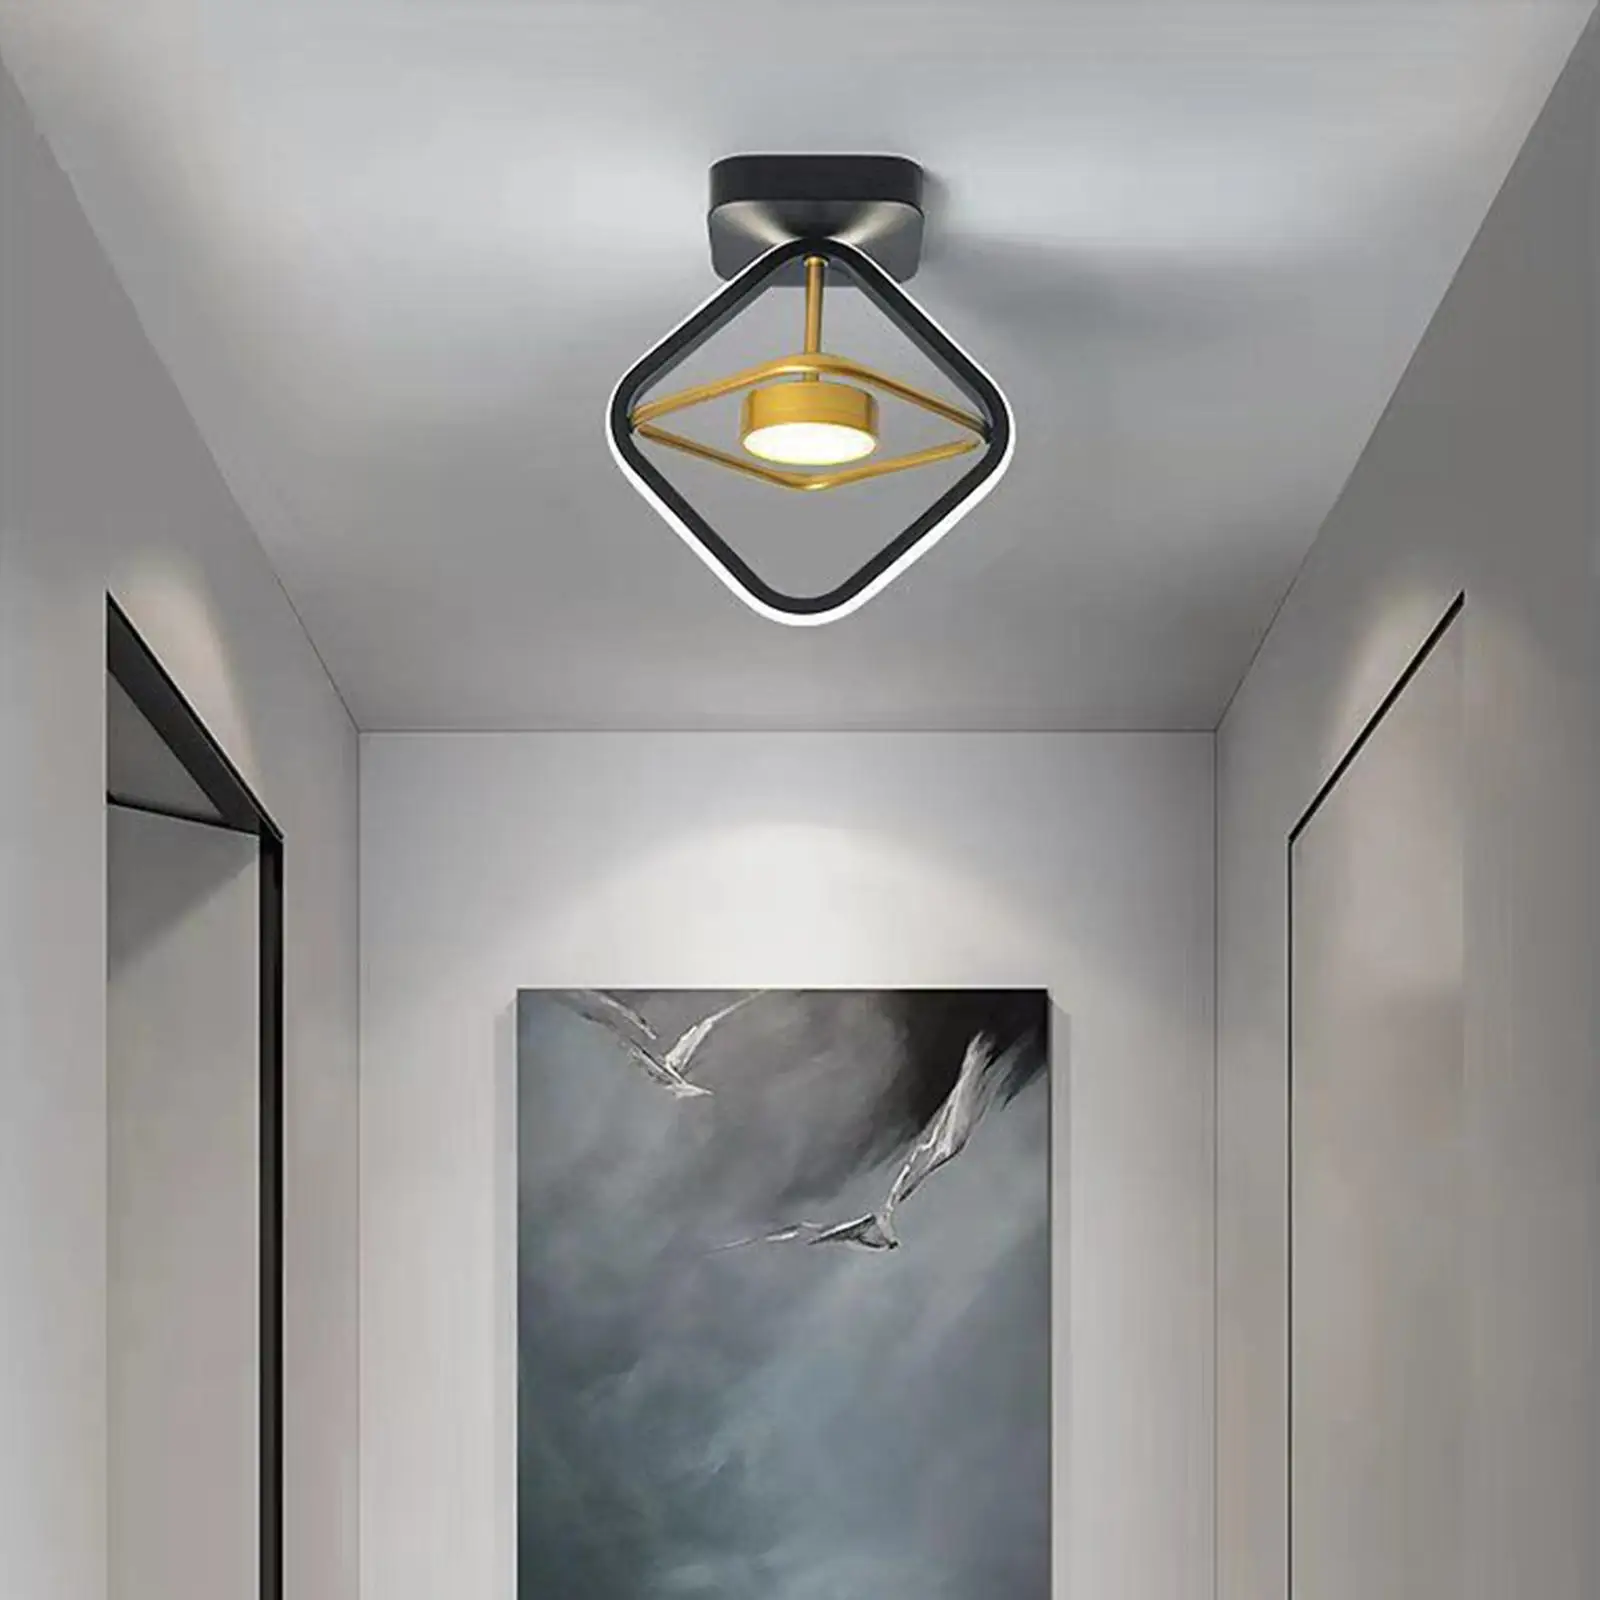 Modern LED Ceiling Light Interior Decorative Flush Mount Hanging Minimalist Aisle Lamp Lighting Fixture for Living Room Bedroom